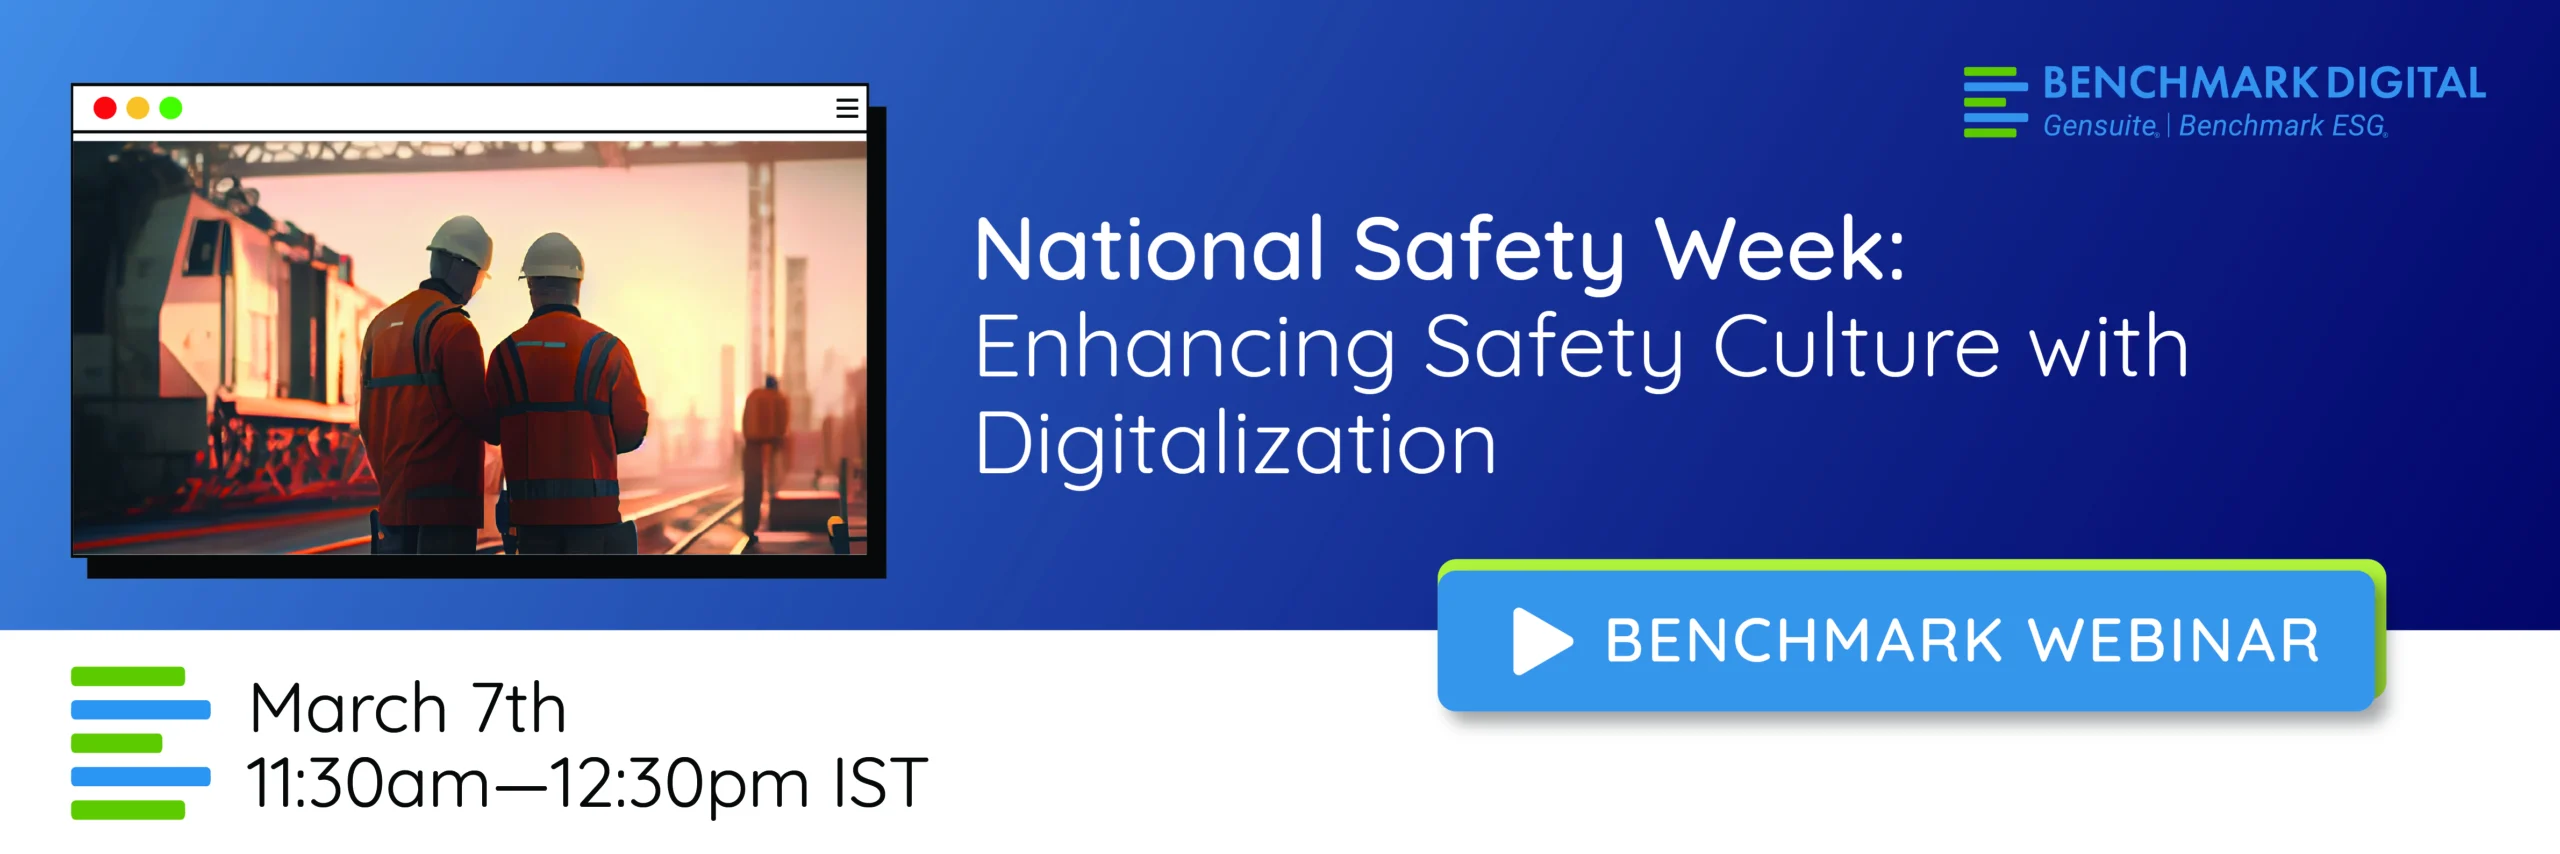 National Safety Week Webinar: Enhancing Safety Culture with Digitalization